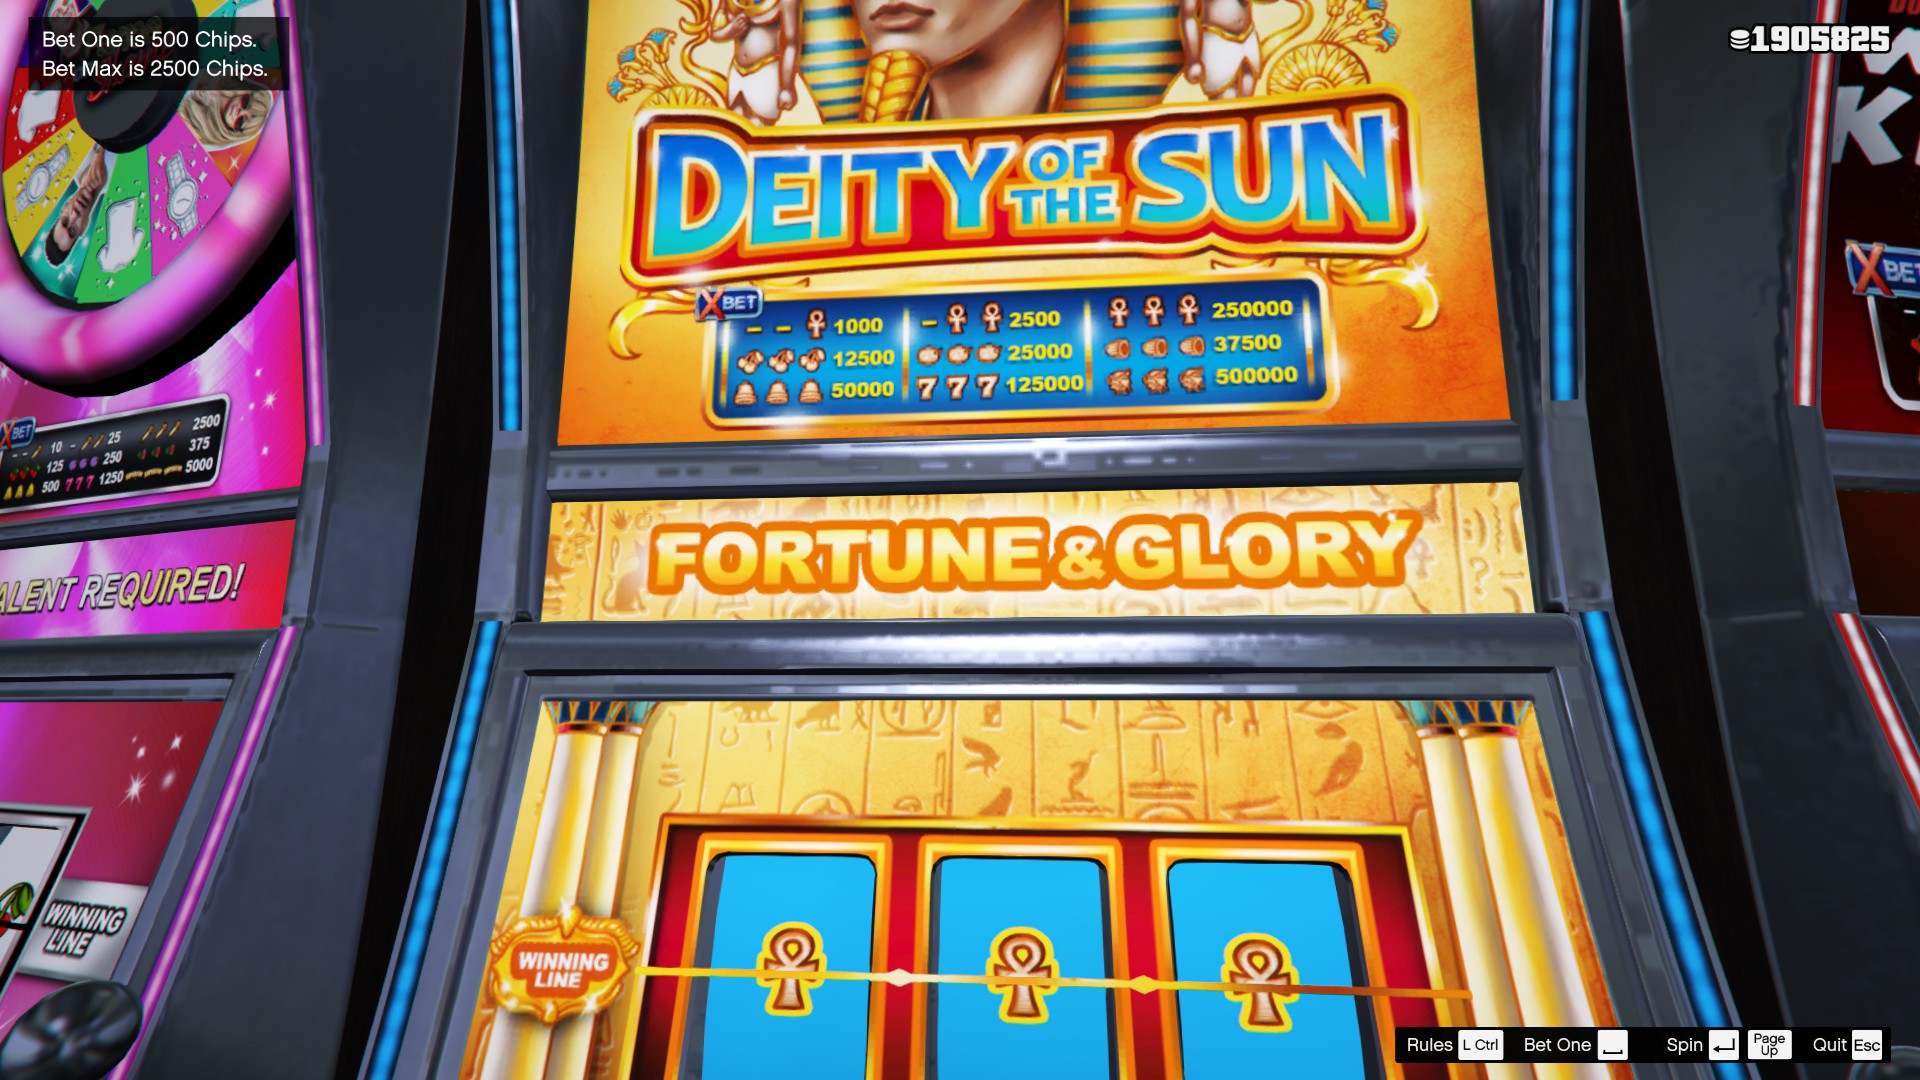 Gta 5 Slot Machine Chances